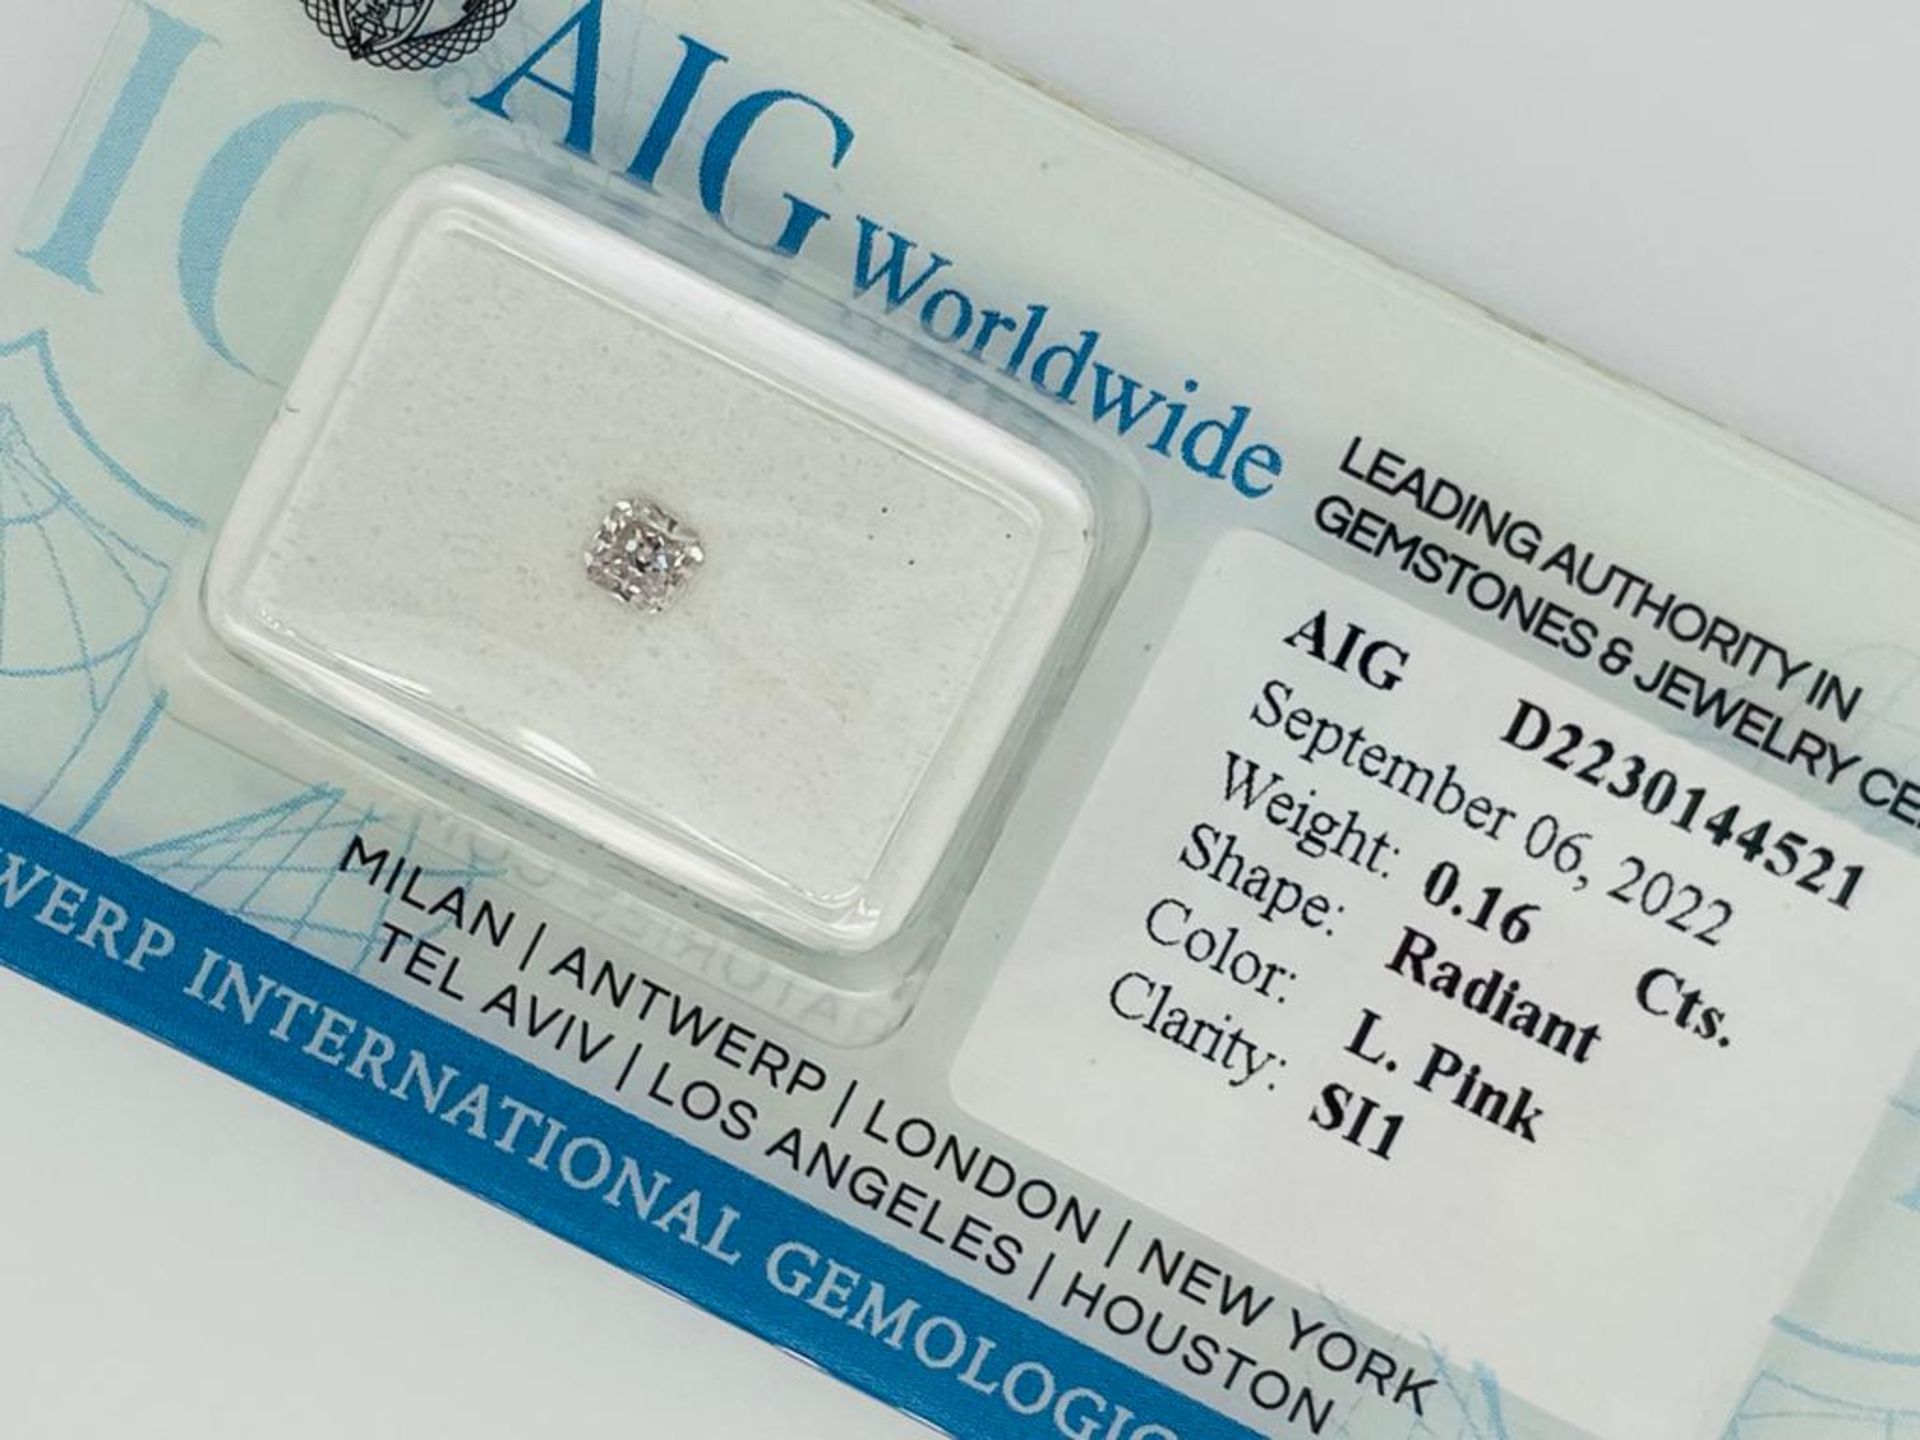 1 DIAMOND 0,16 CT LIGHT PINK - SI1 - SHAPE RADIANT - CERTIFICATION AIG - F20901-35 - Image 3 of 5